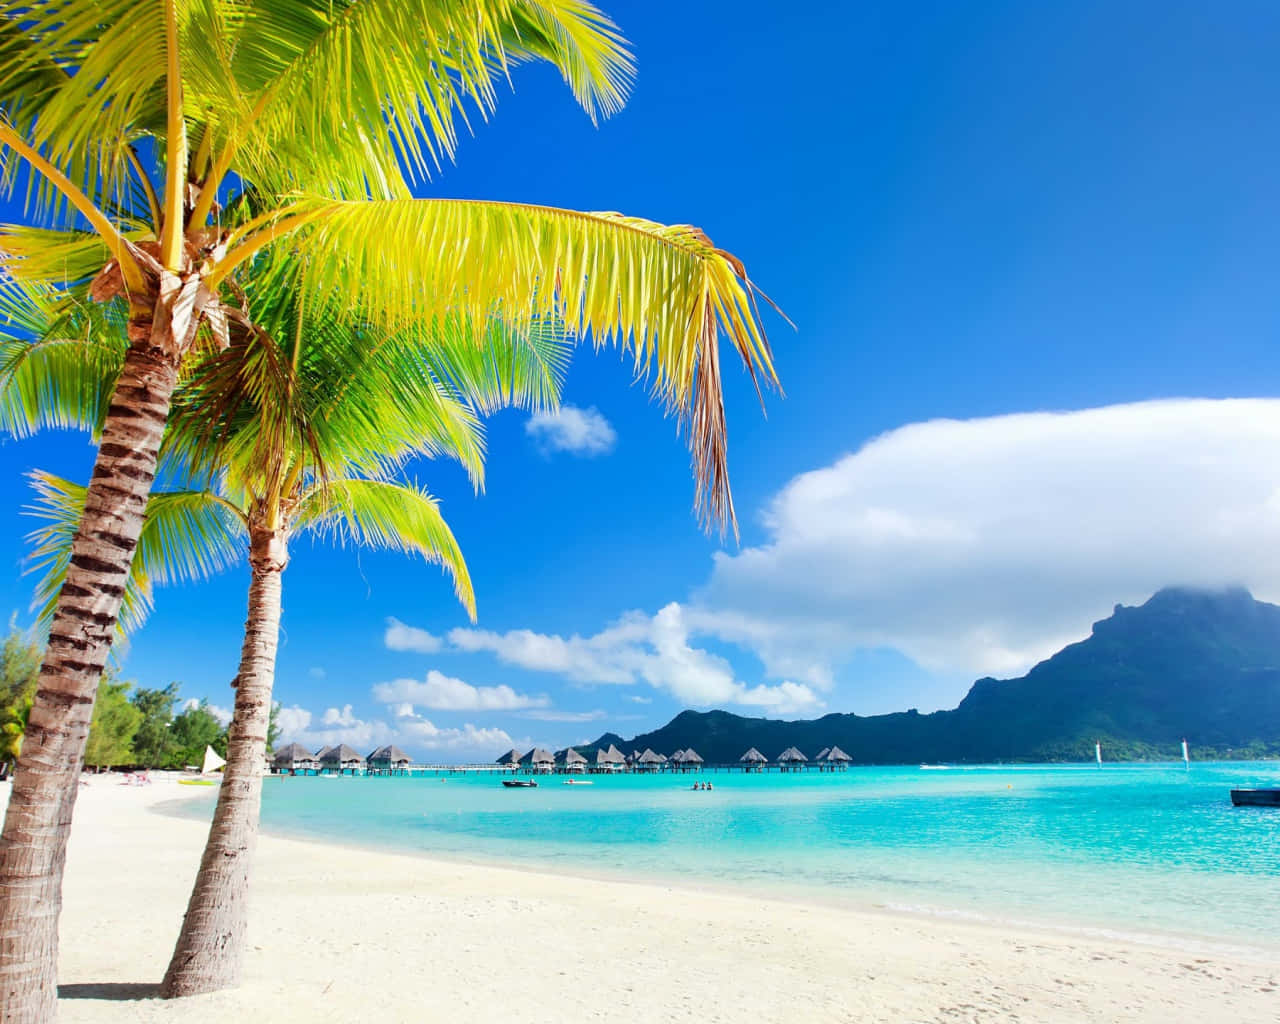 Take a tropical getaway in magical Bora Bora Wallpaper